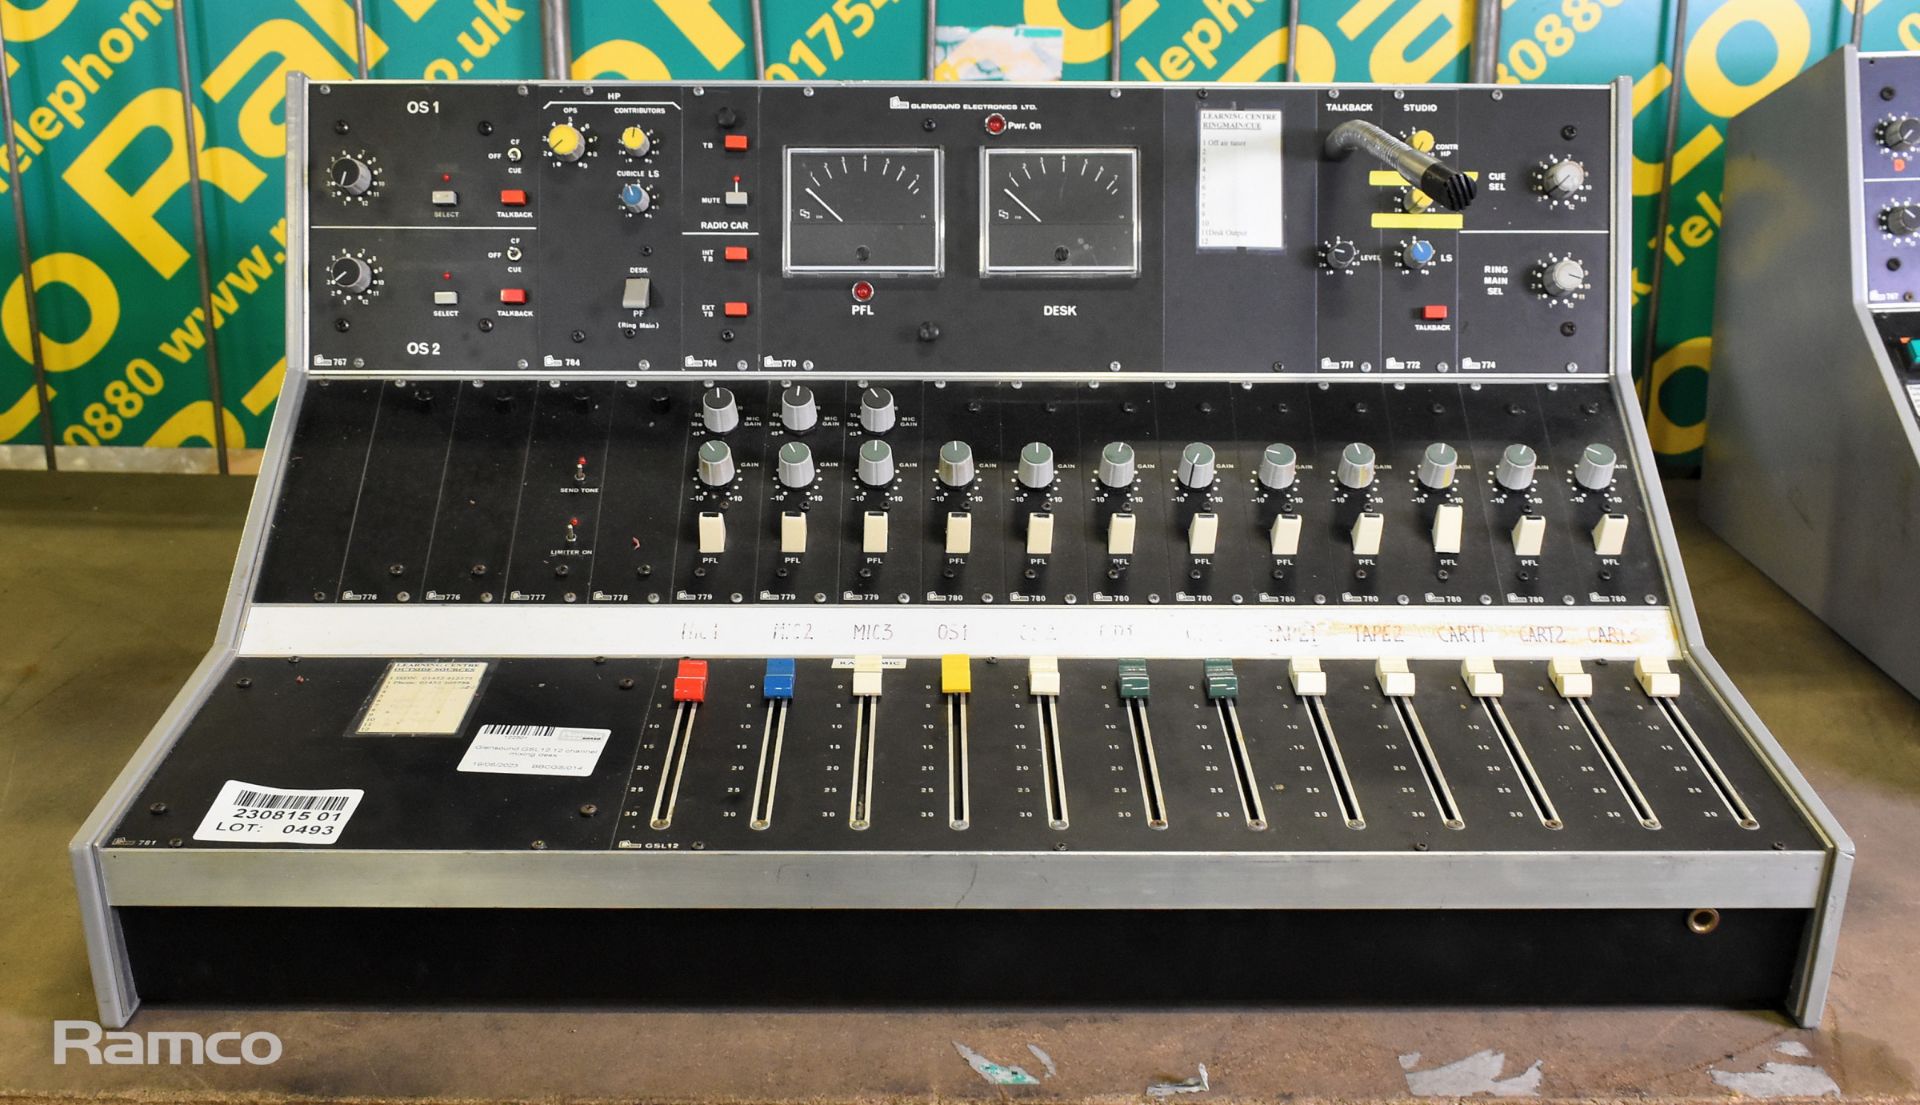 Glensound GSL12 12 channel mixing desk